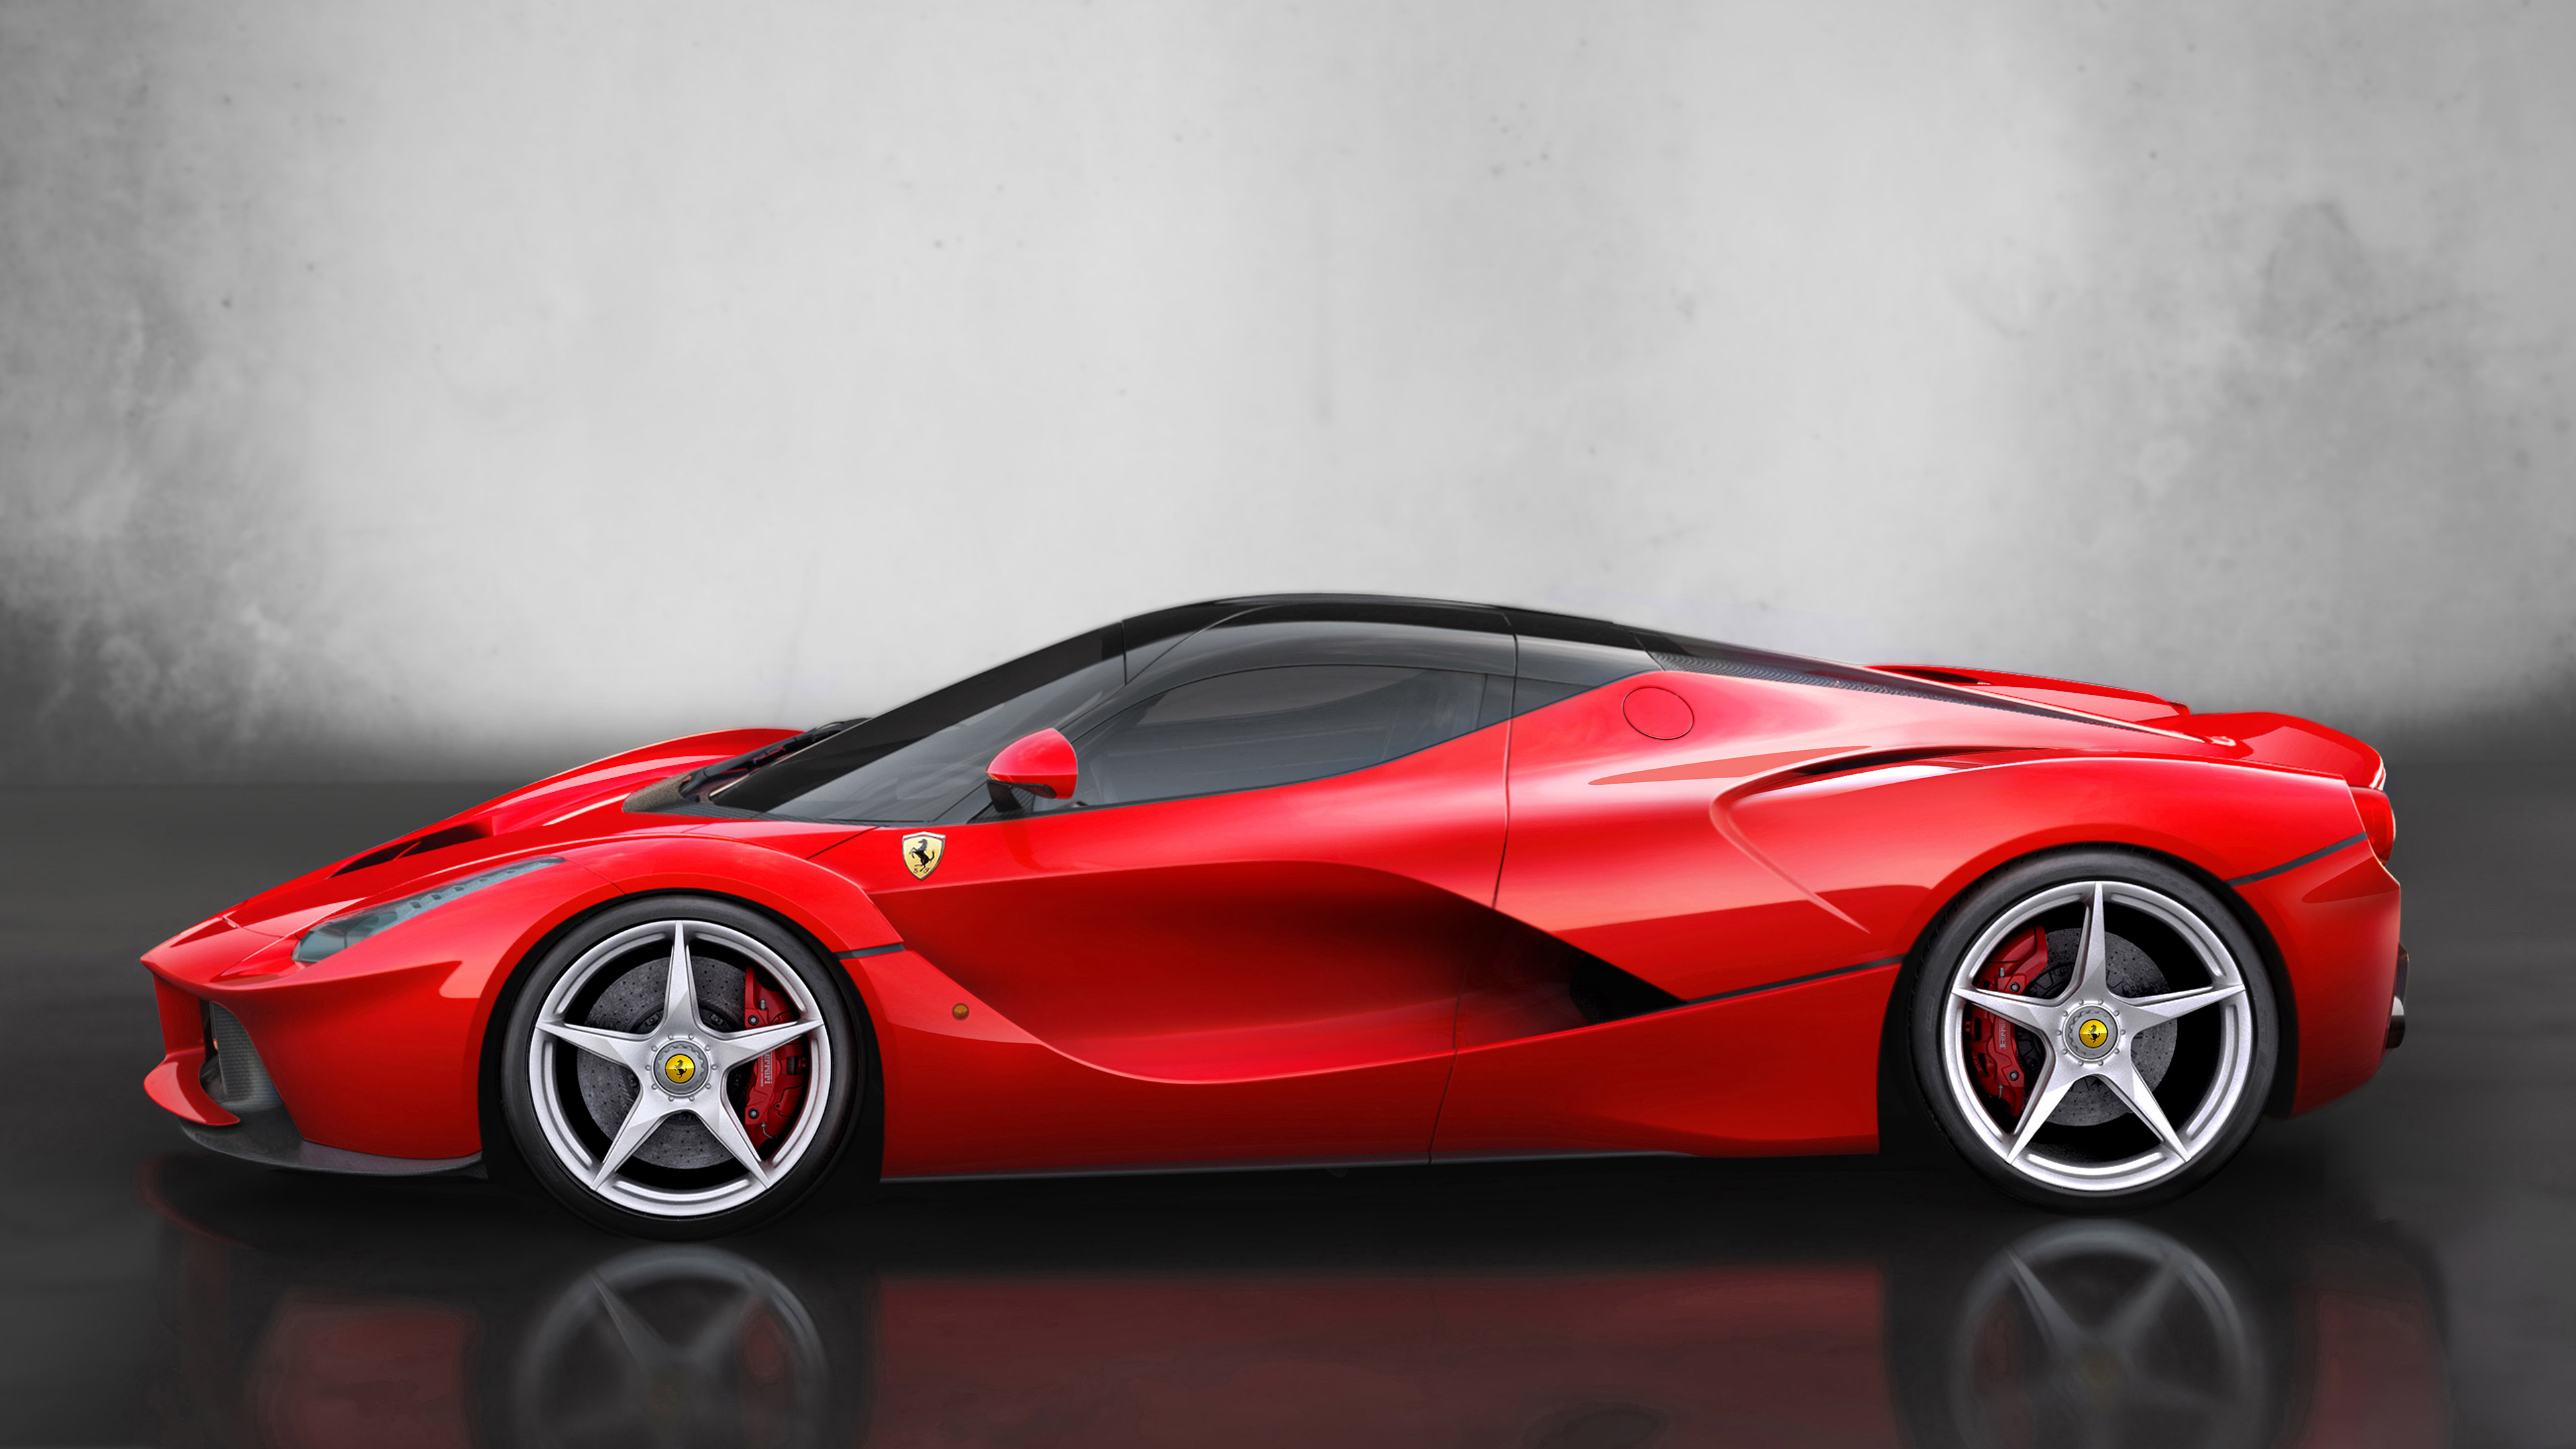  2014 Ferrari LaFerrari Wallpaper.